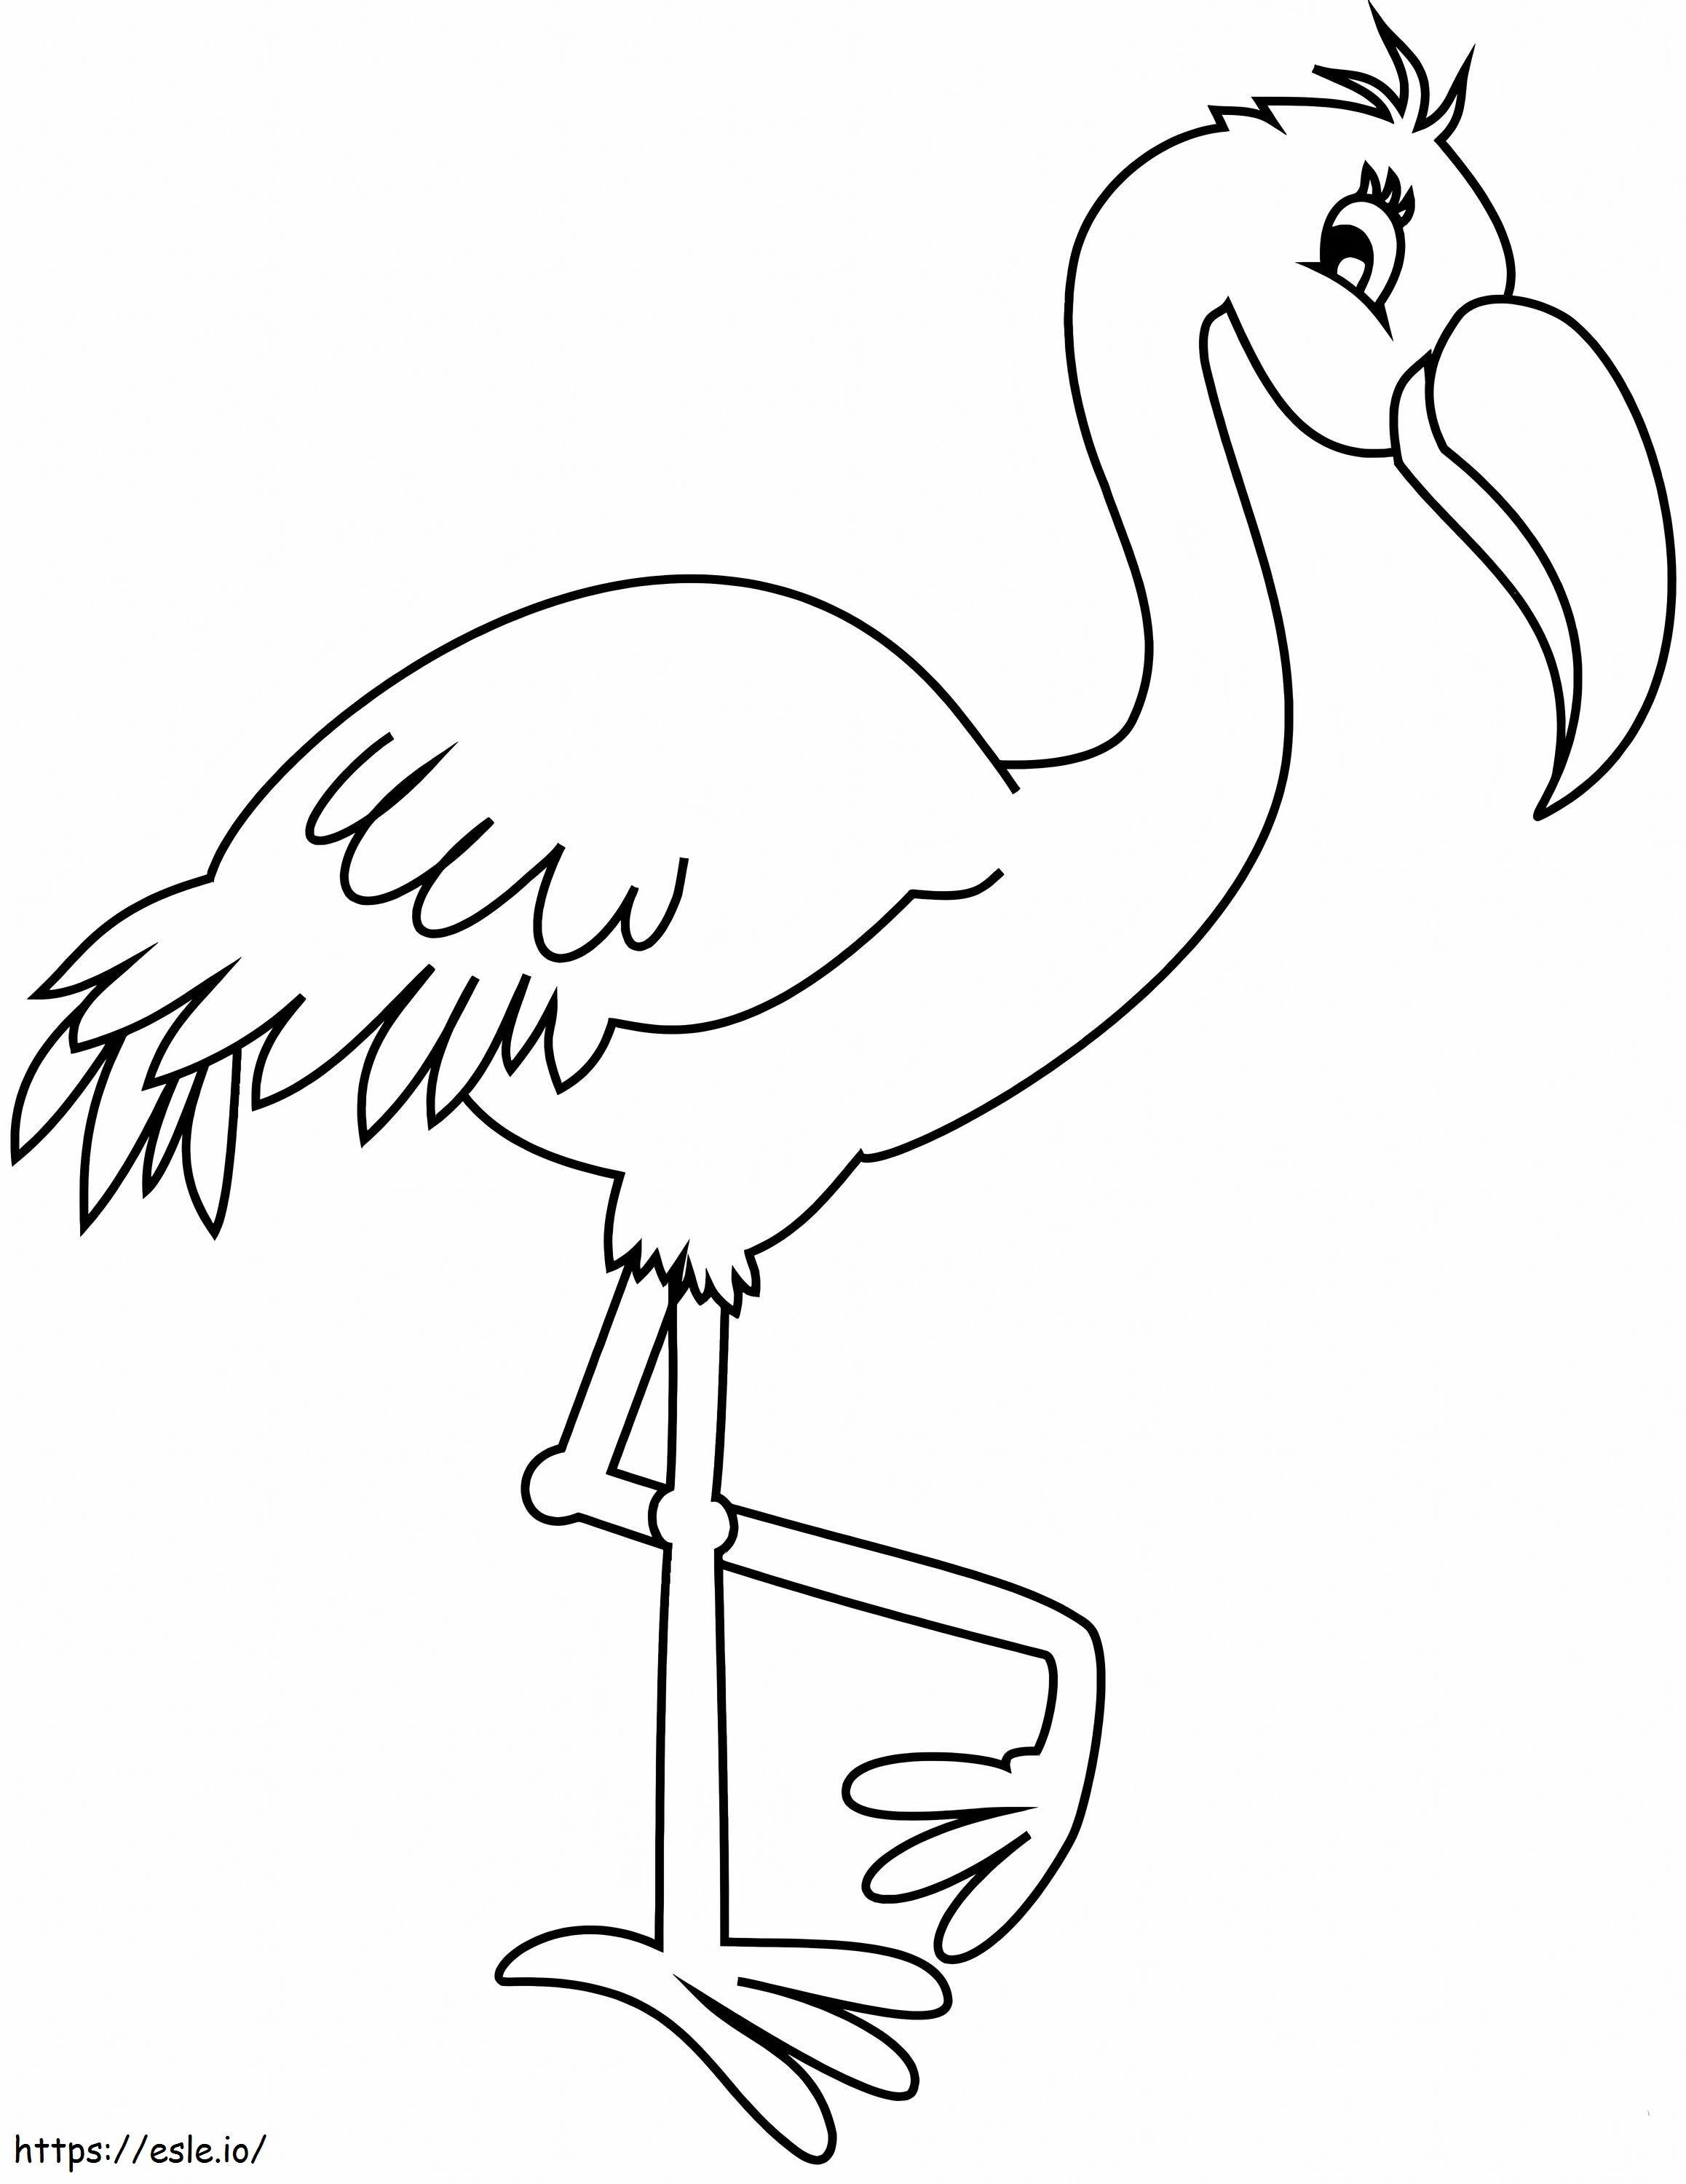 Flamingo Hd Image coloring page